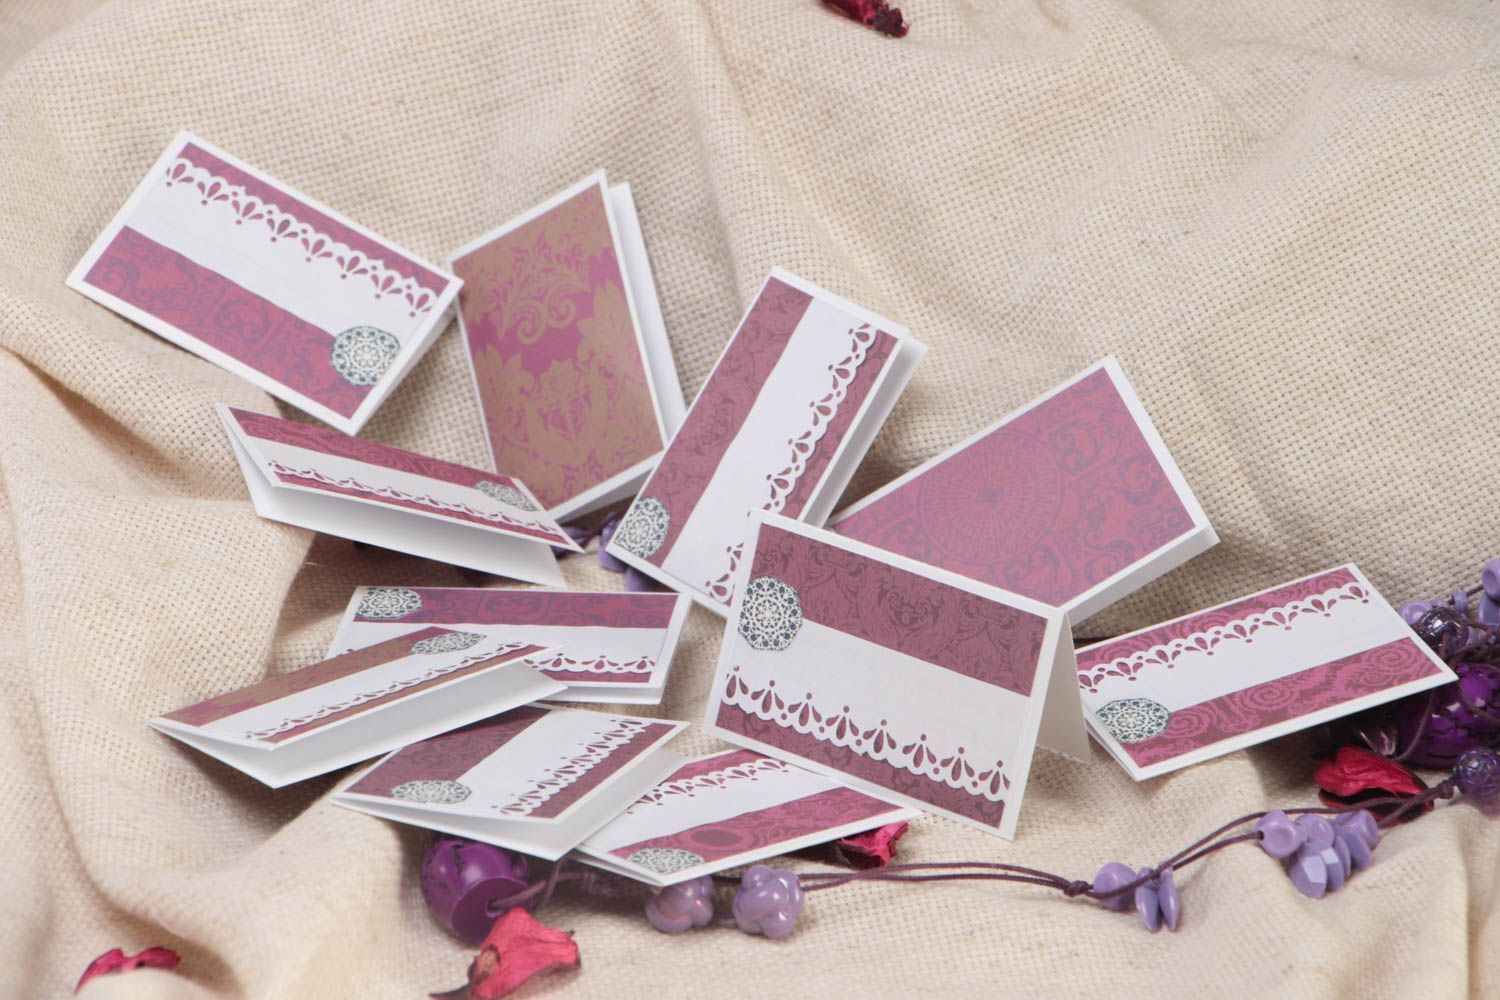 Set of 11 handmade scrapbooking wedding place cards in violet color palette photo 1